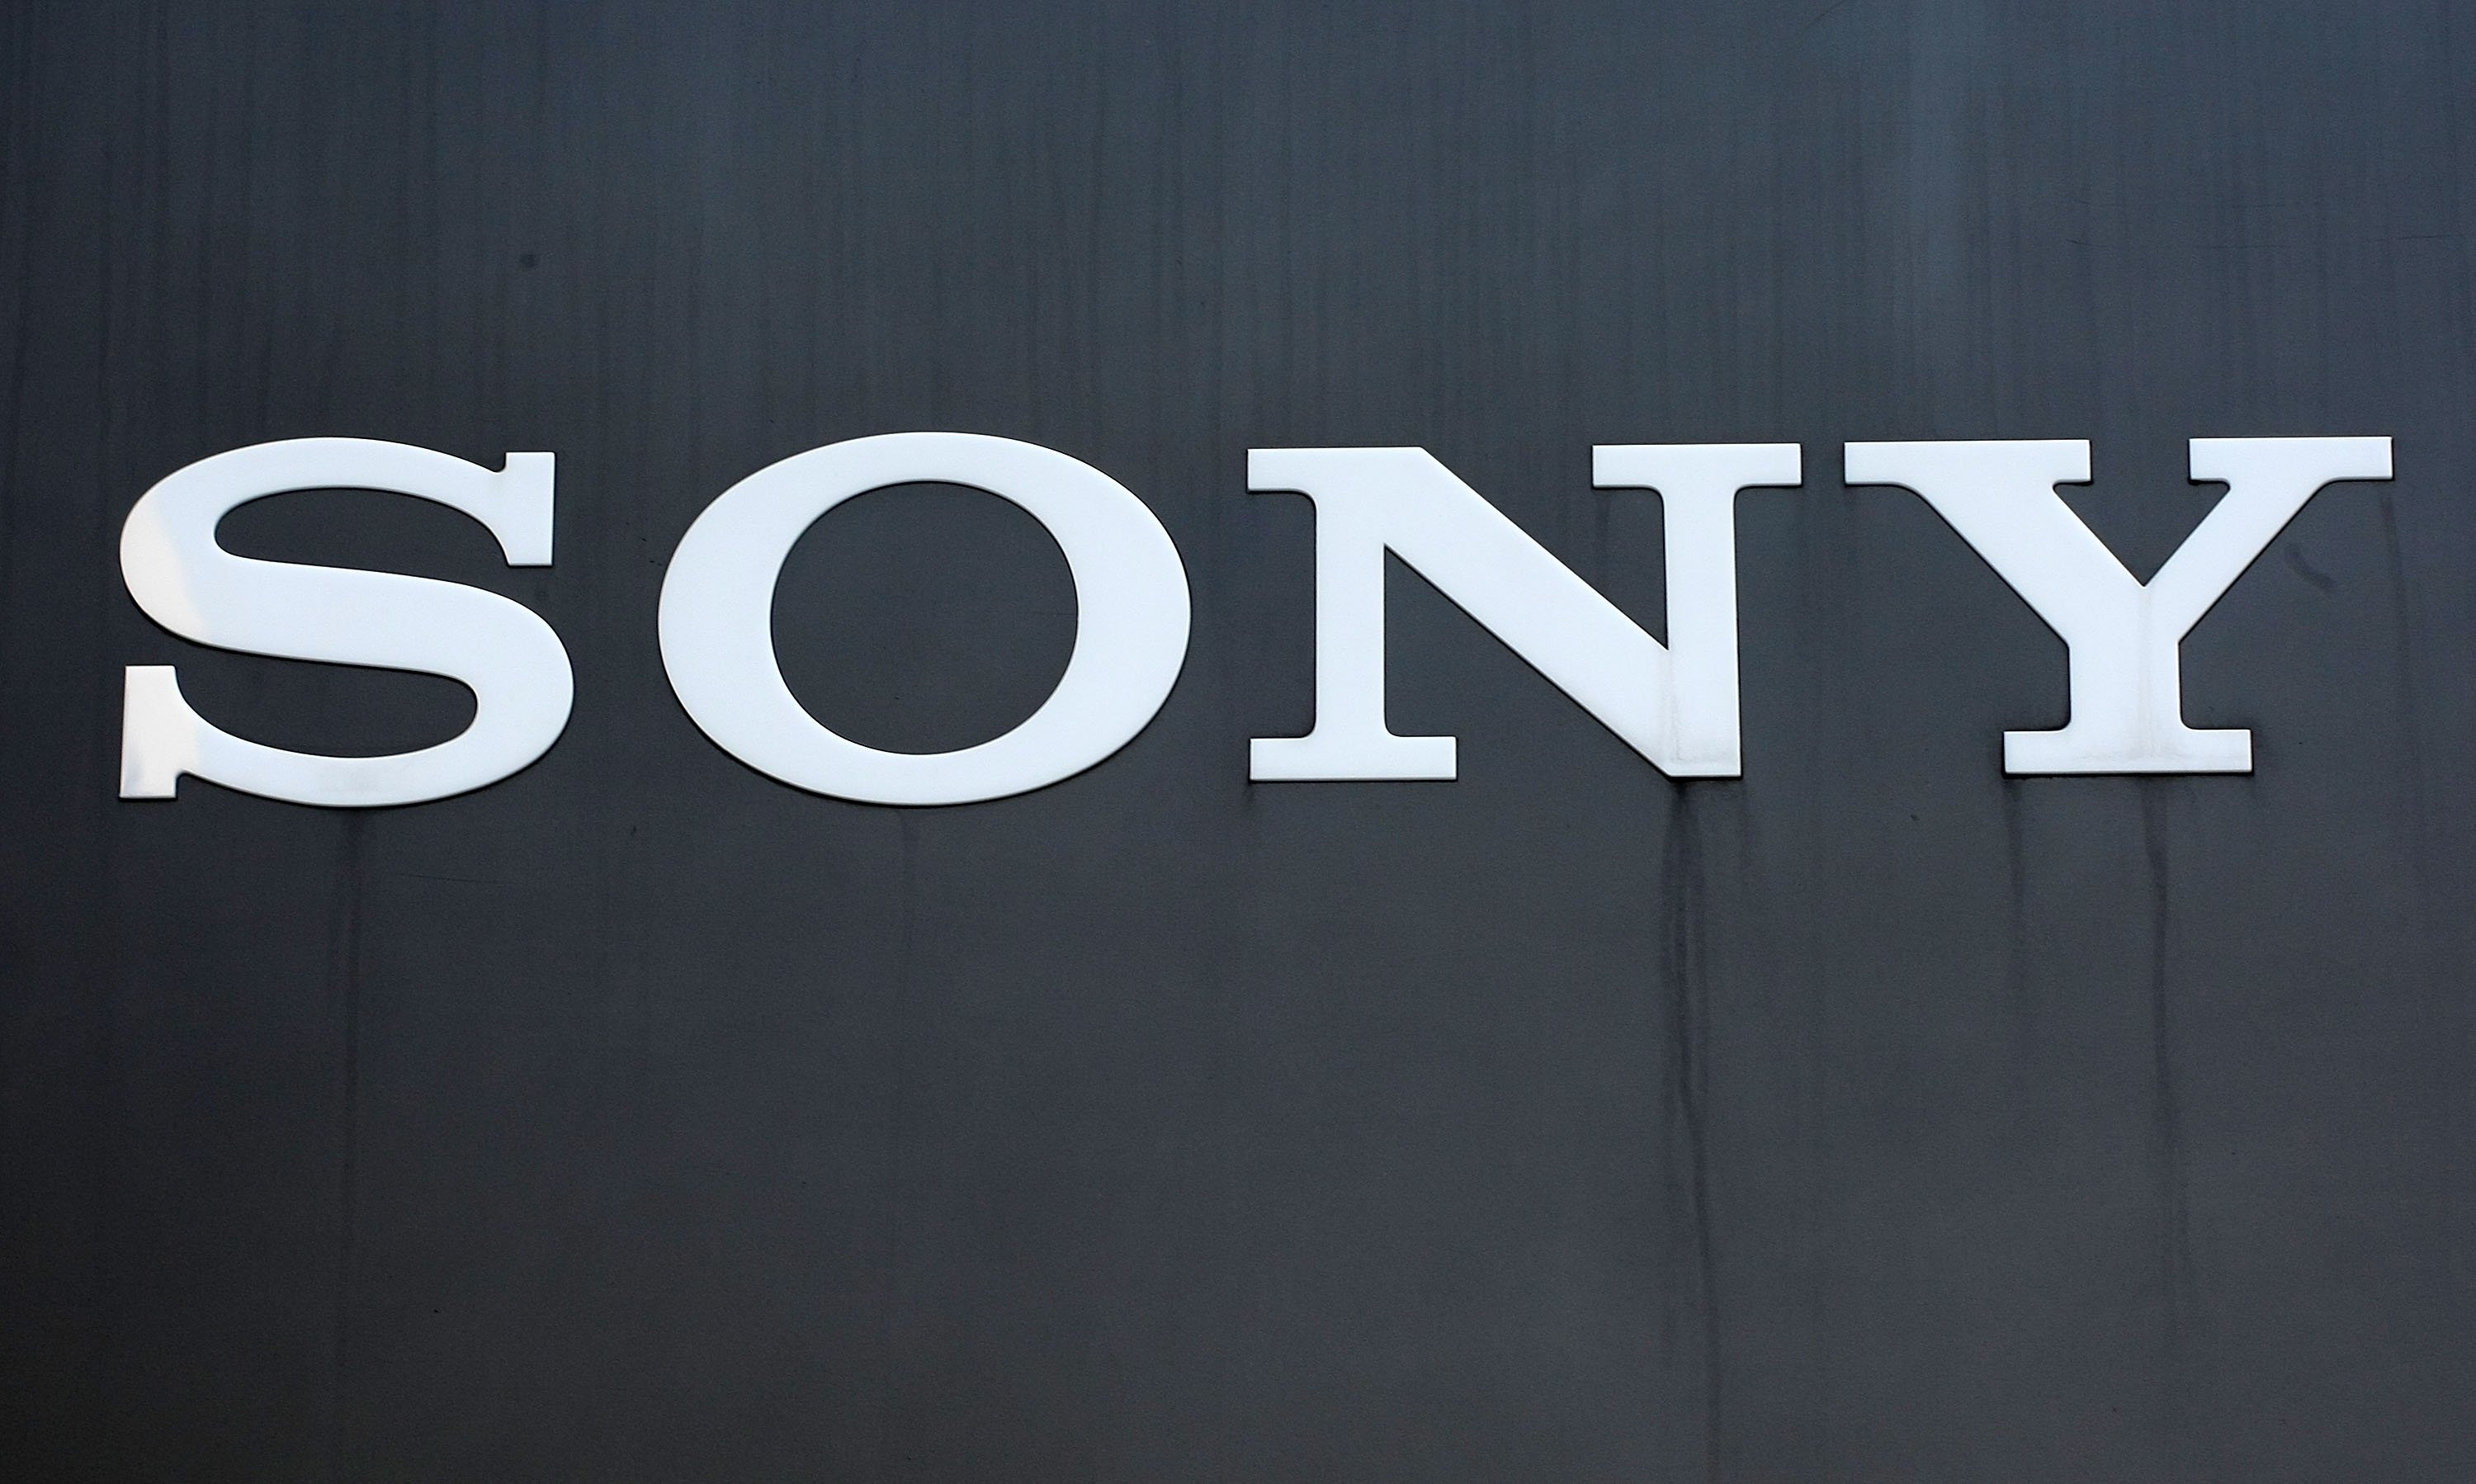 Sony logo